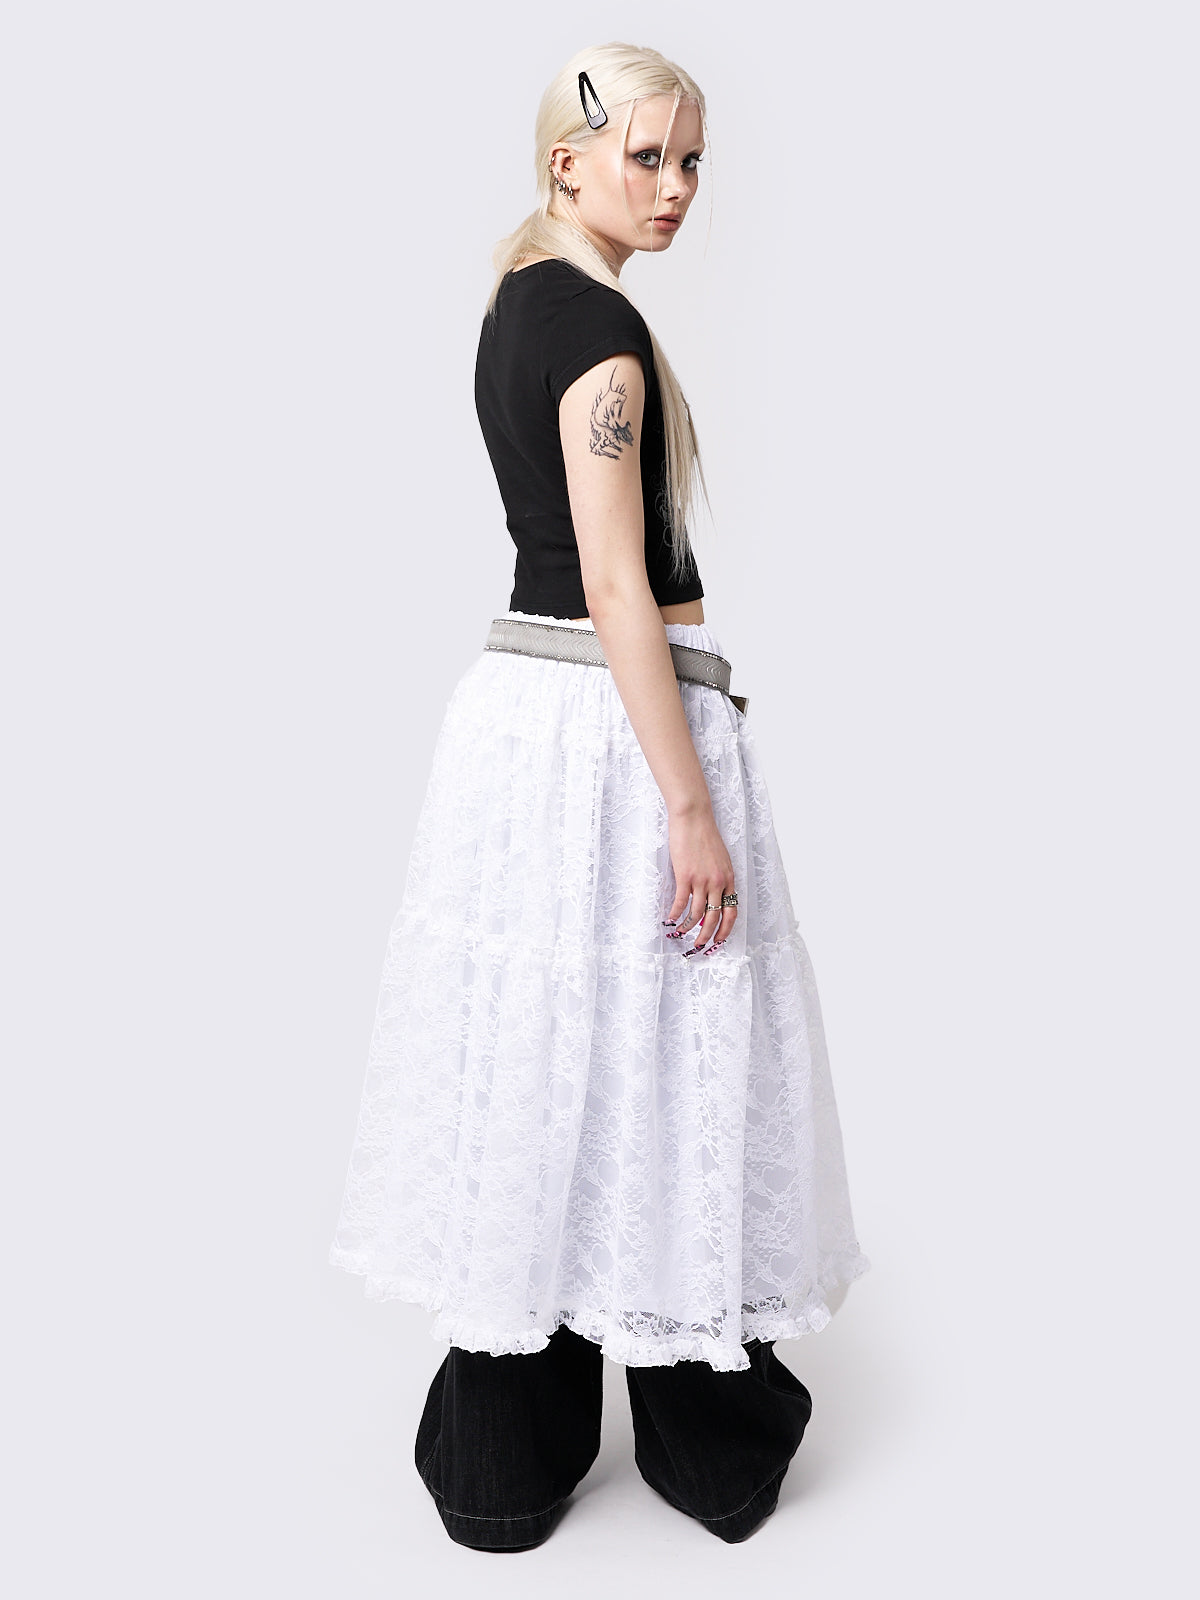 Cordelia Ruffled Lace Maxi Skirt